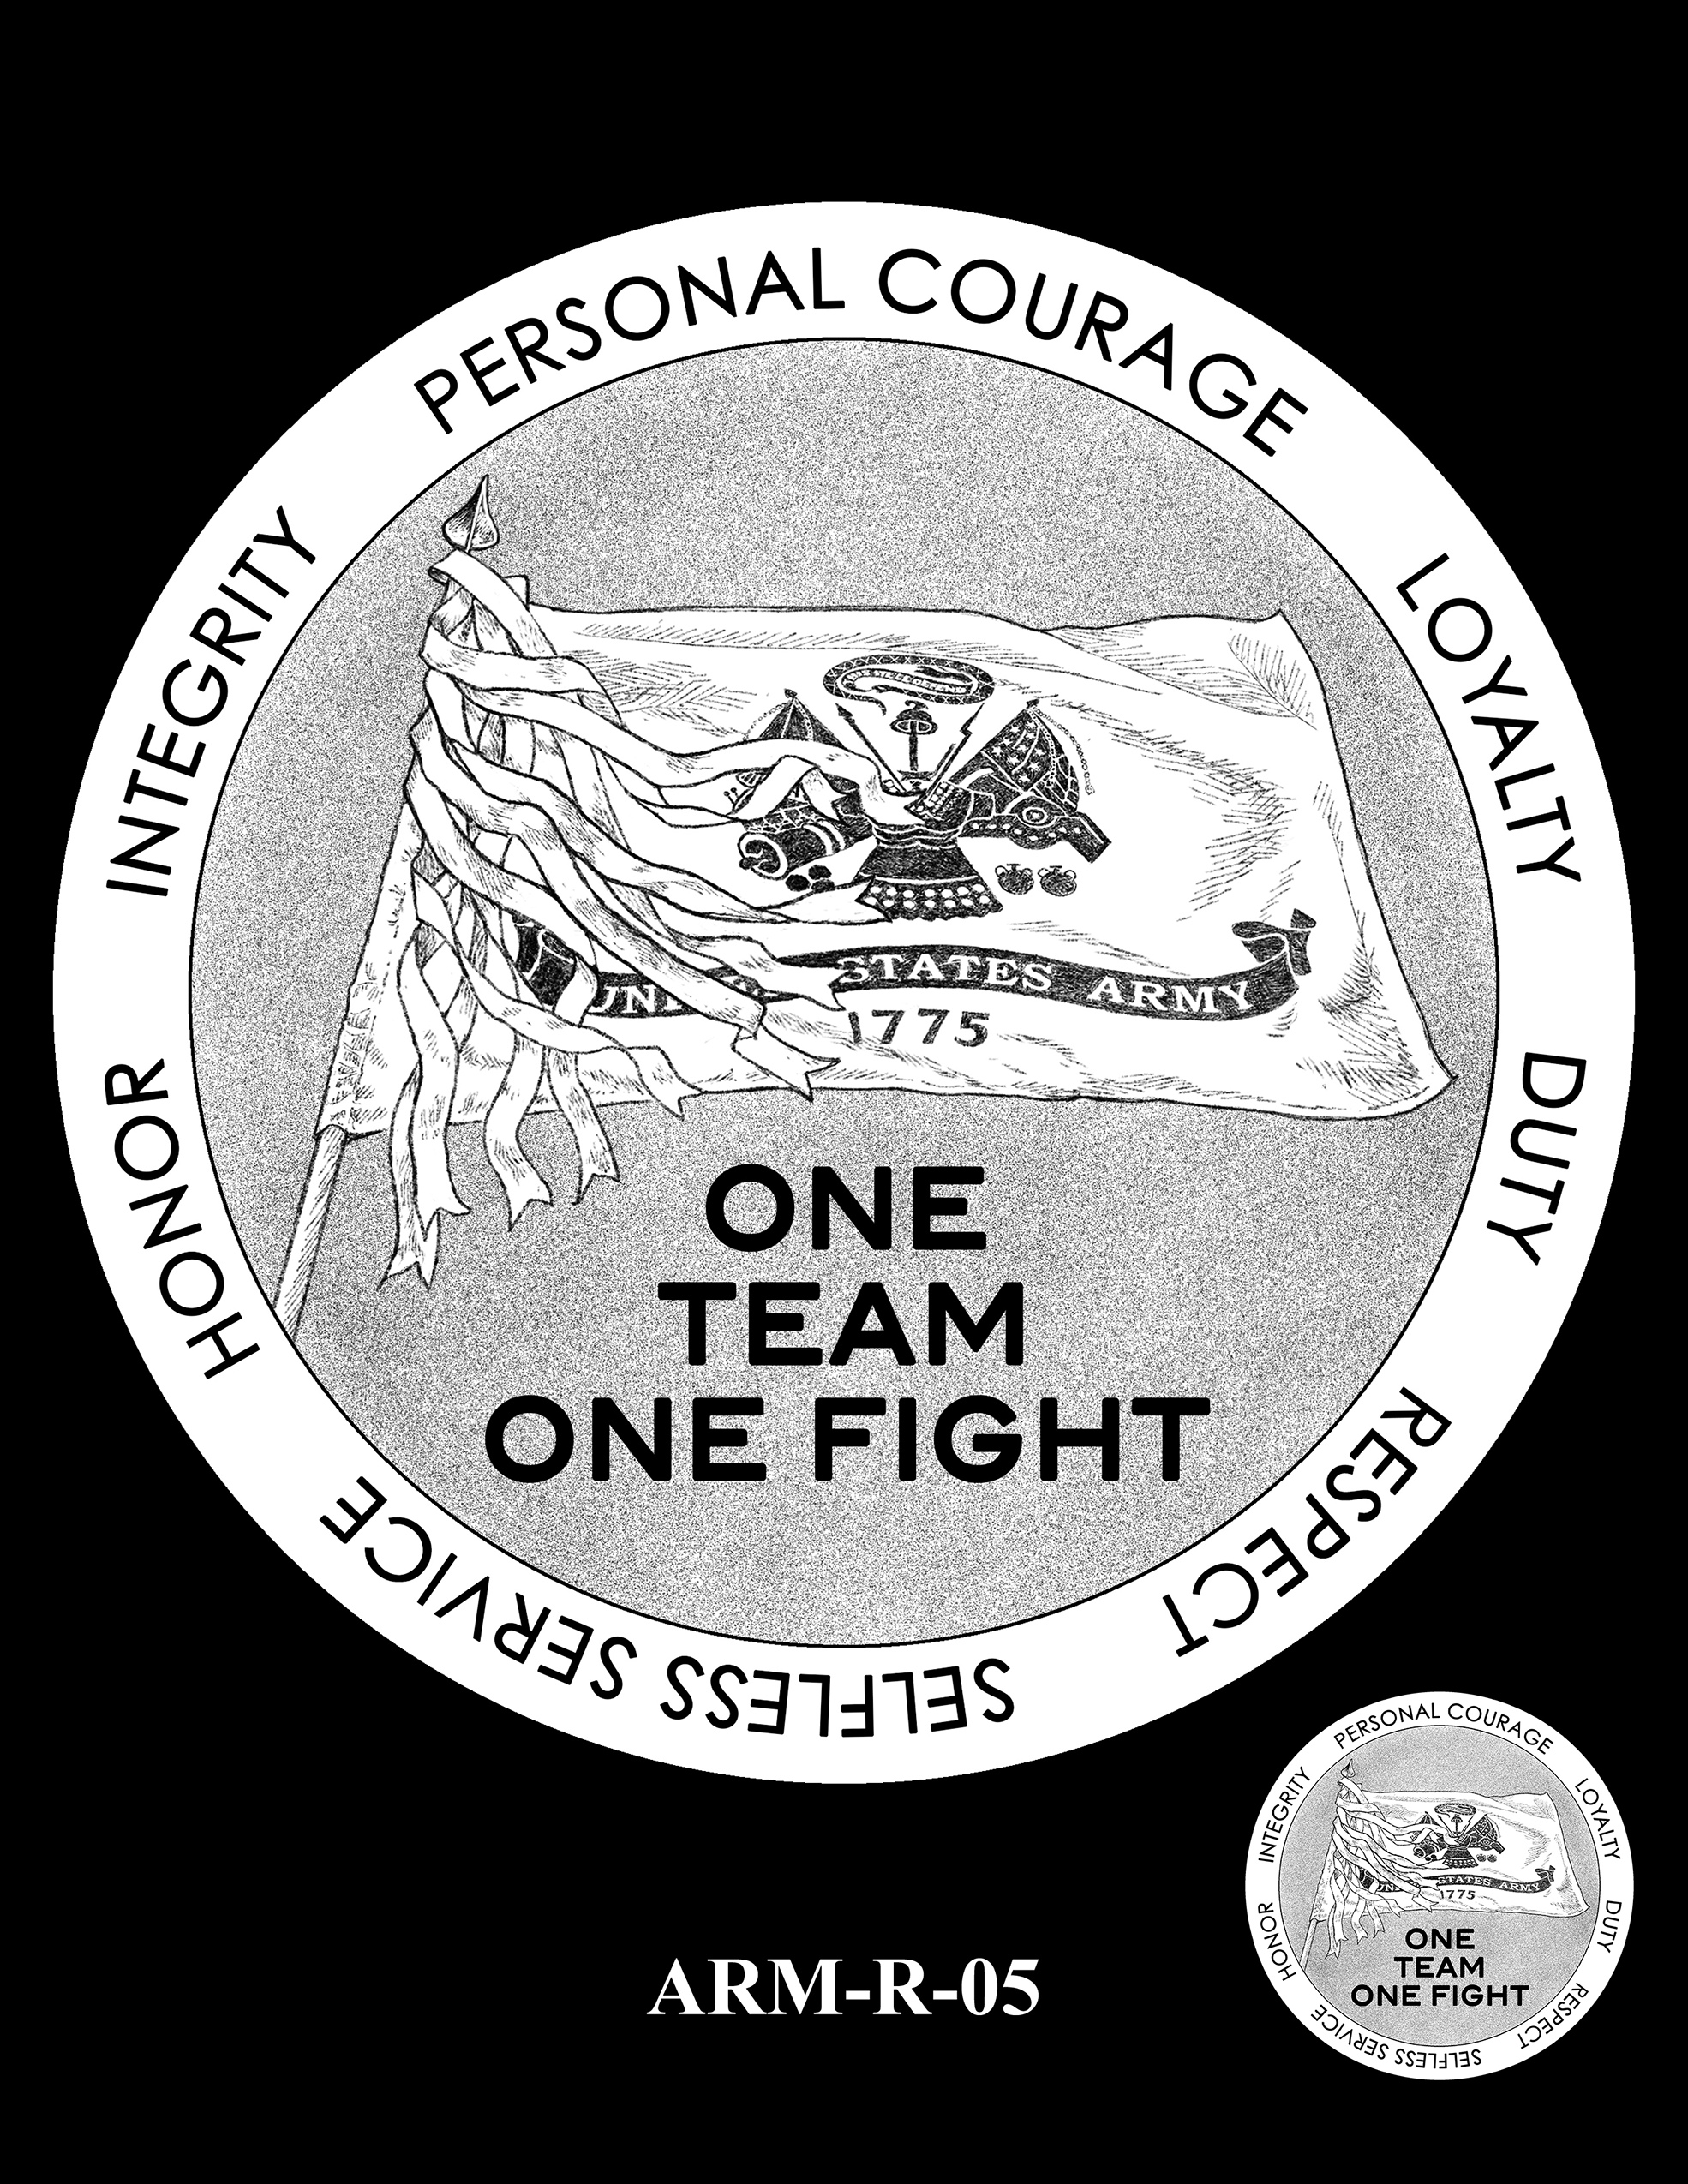 ARM-R-05 -- United States Army Silver Medal